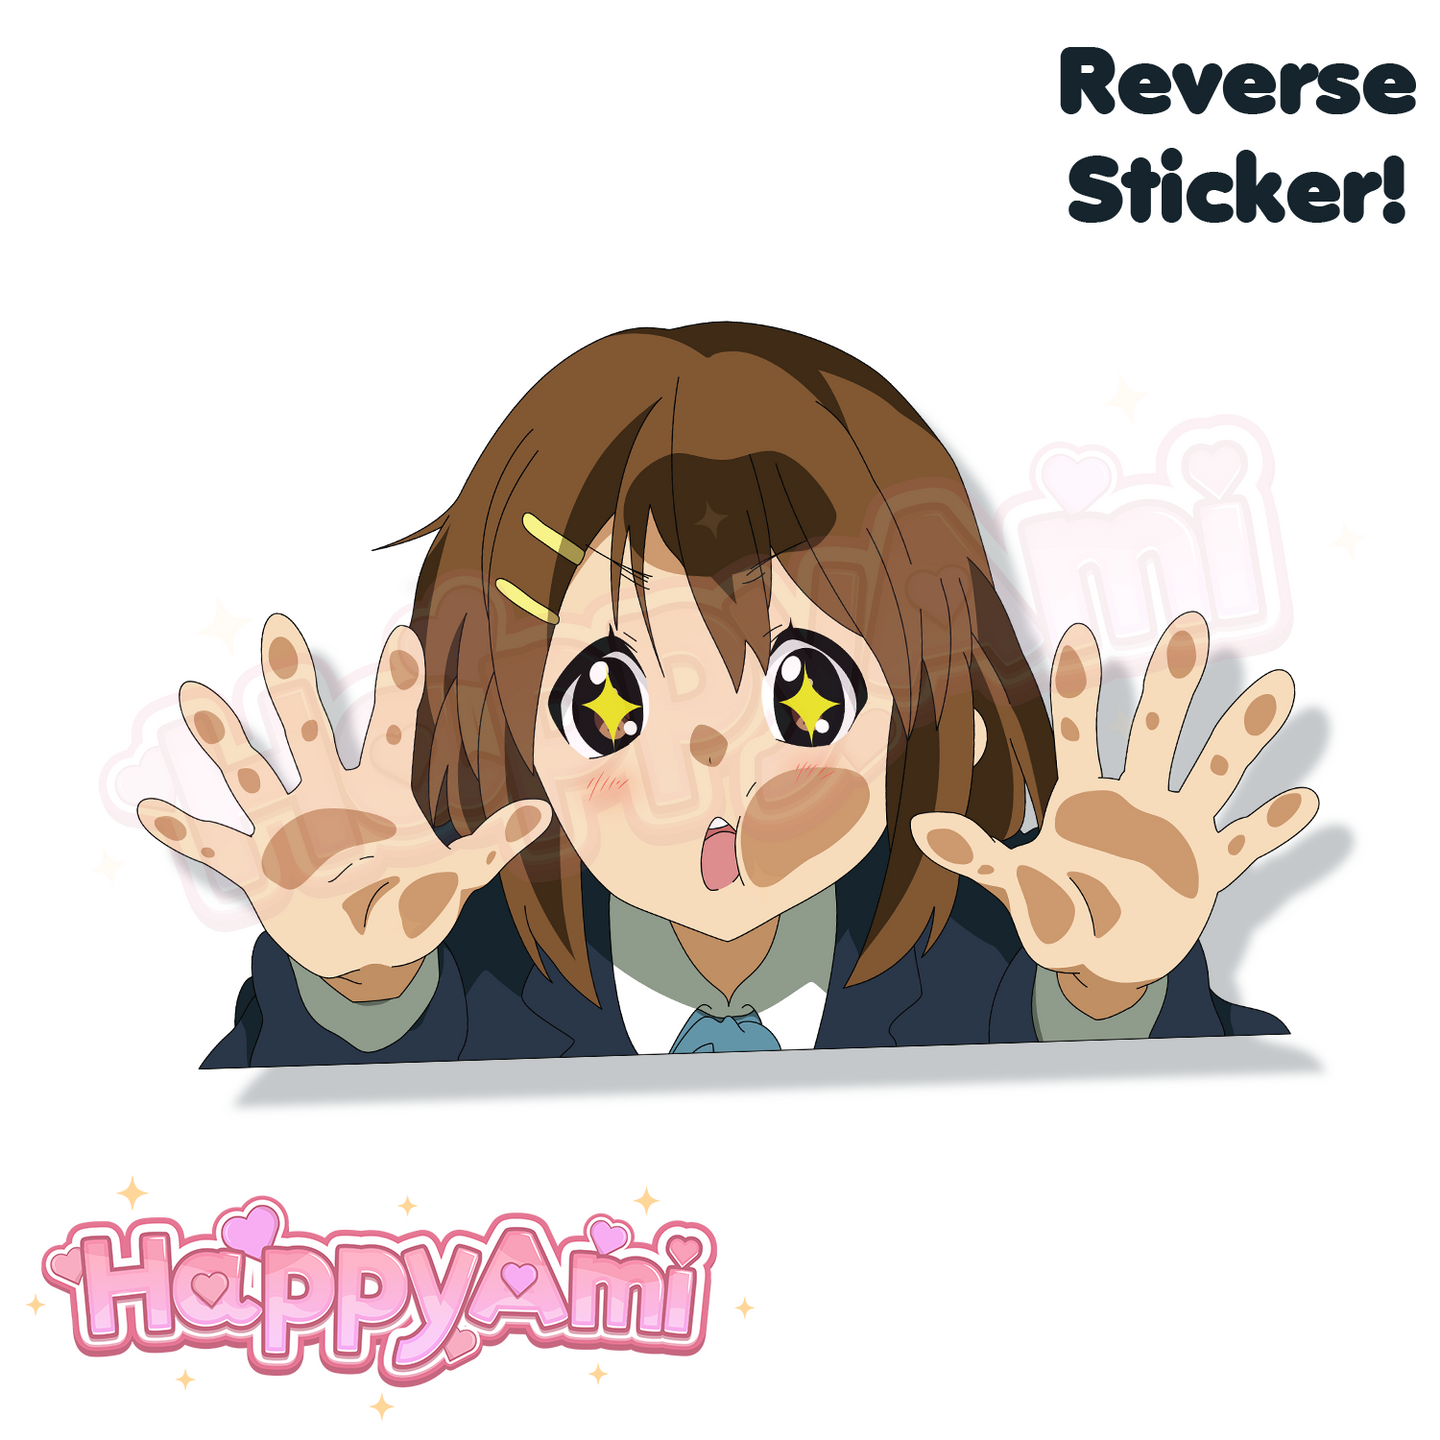 Yui Reverse Stickers